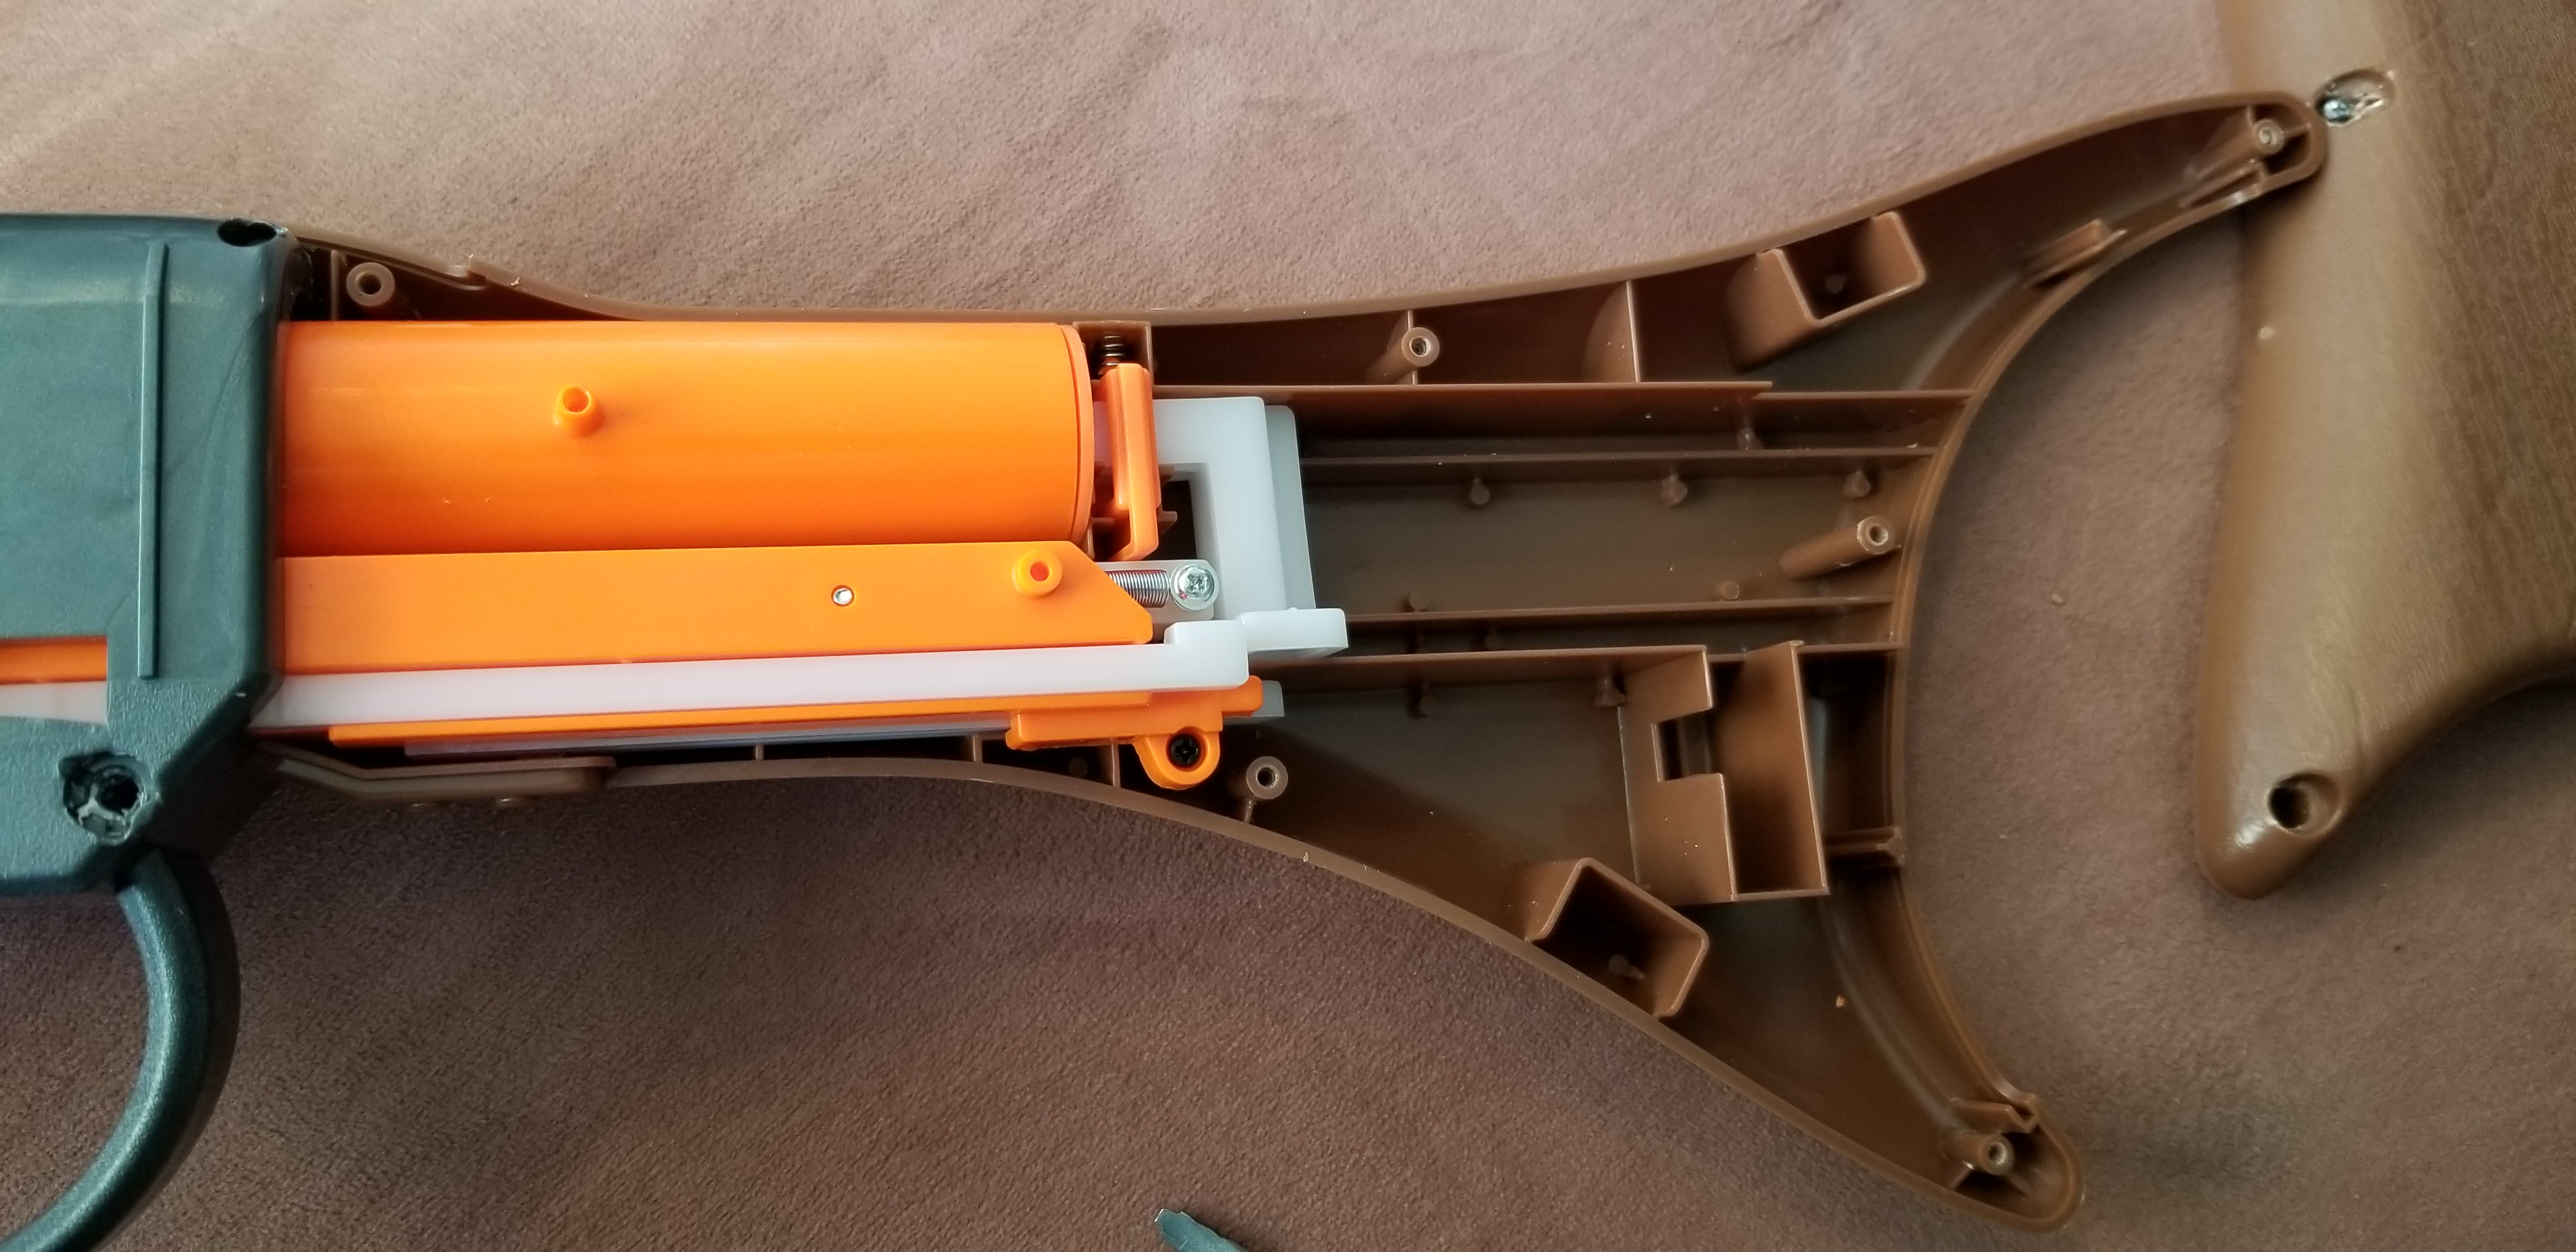 Rifle NERF Amban Phase-Pulse Blaster – Cópia da Arma de Din Djarin em Star  Wars The Mandalorian « Blog de Brinquedo